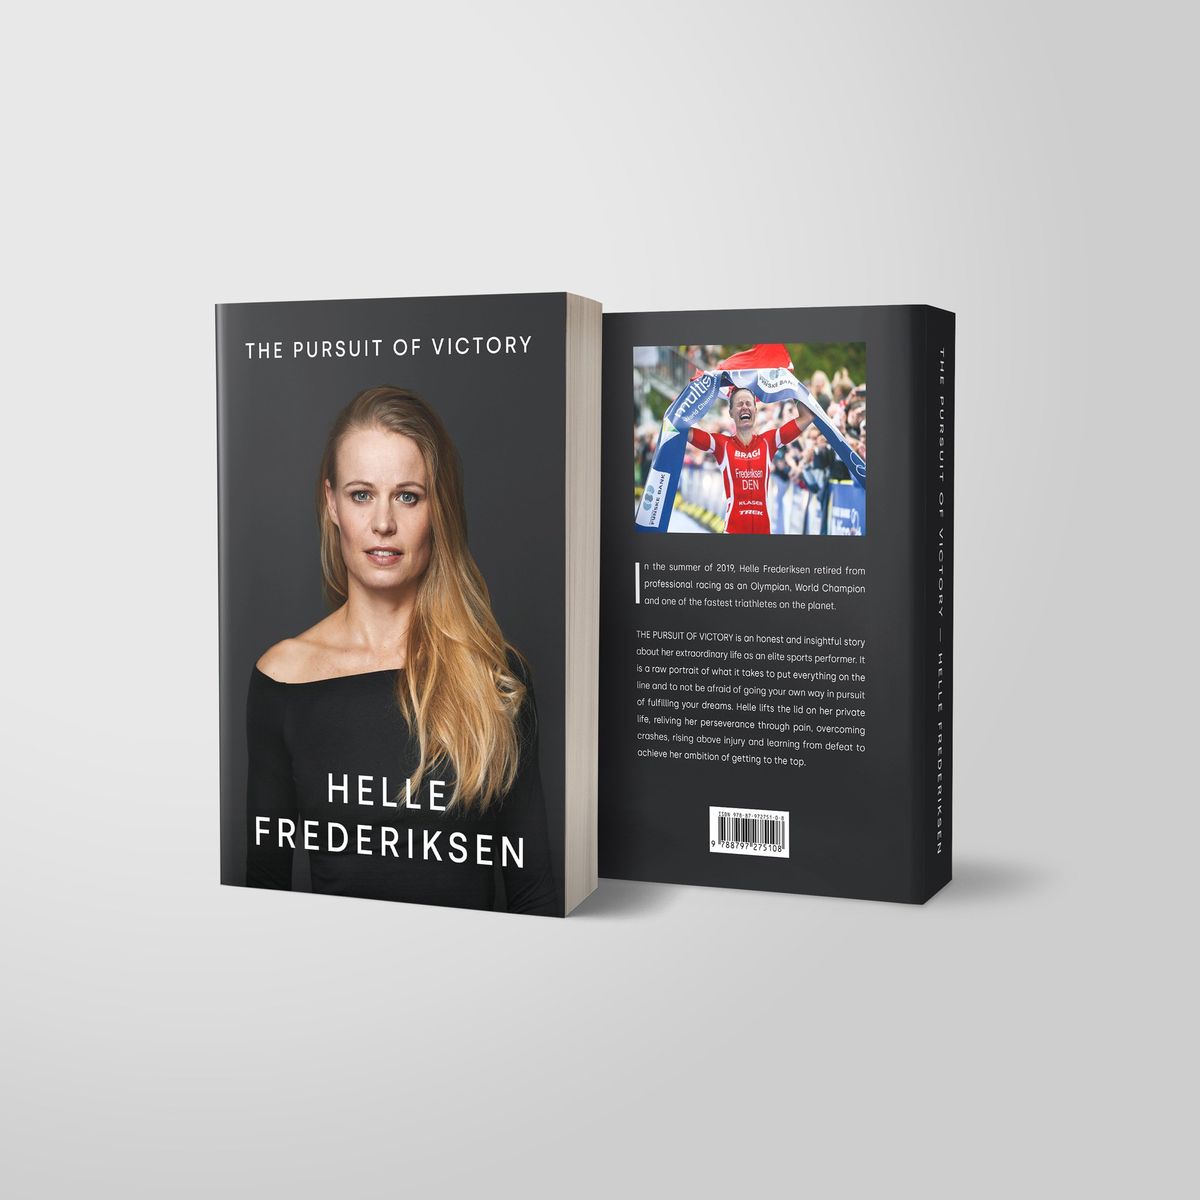 Former Pro Helle Frederiksen opens up in her inspiring international autobiography